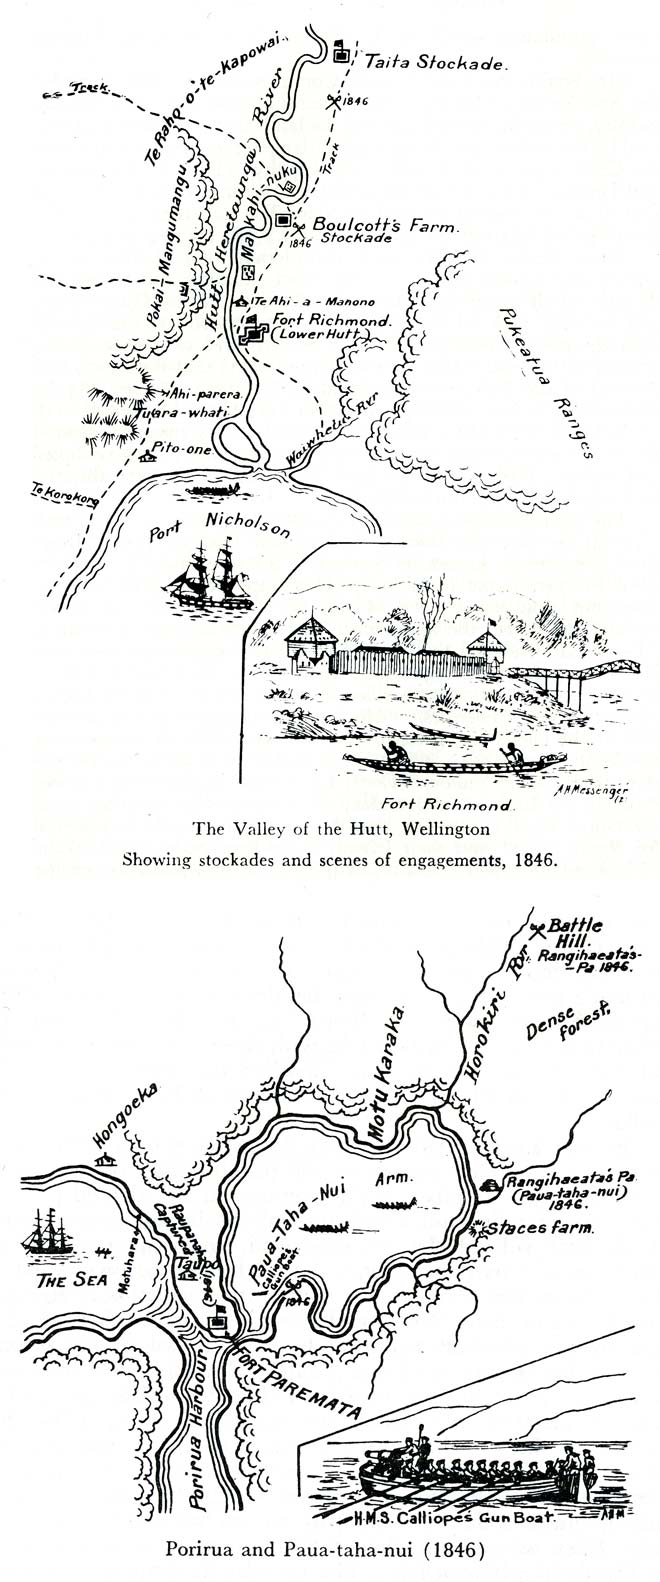 Wellington region battles, 1846